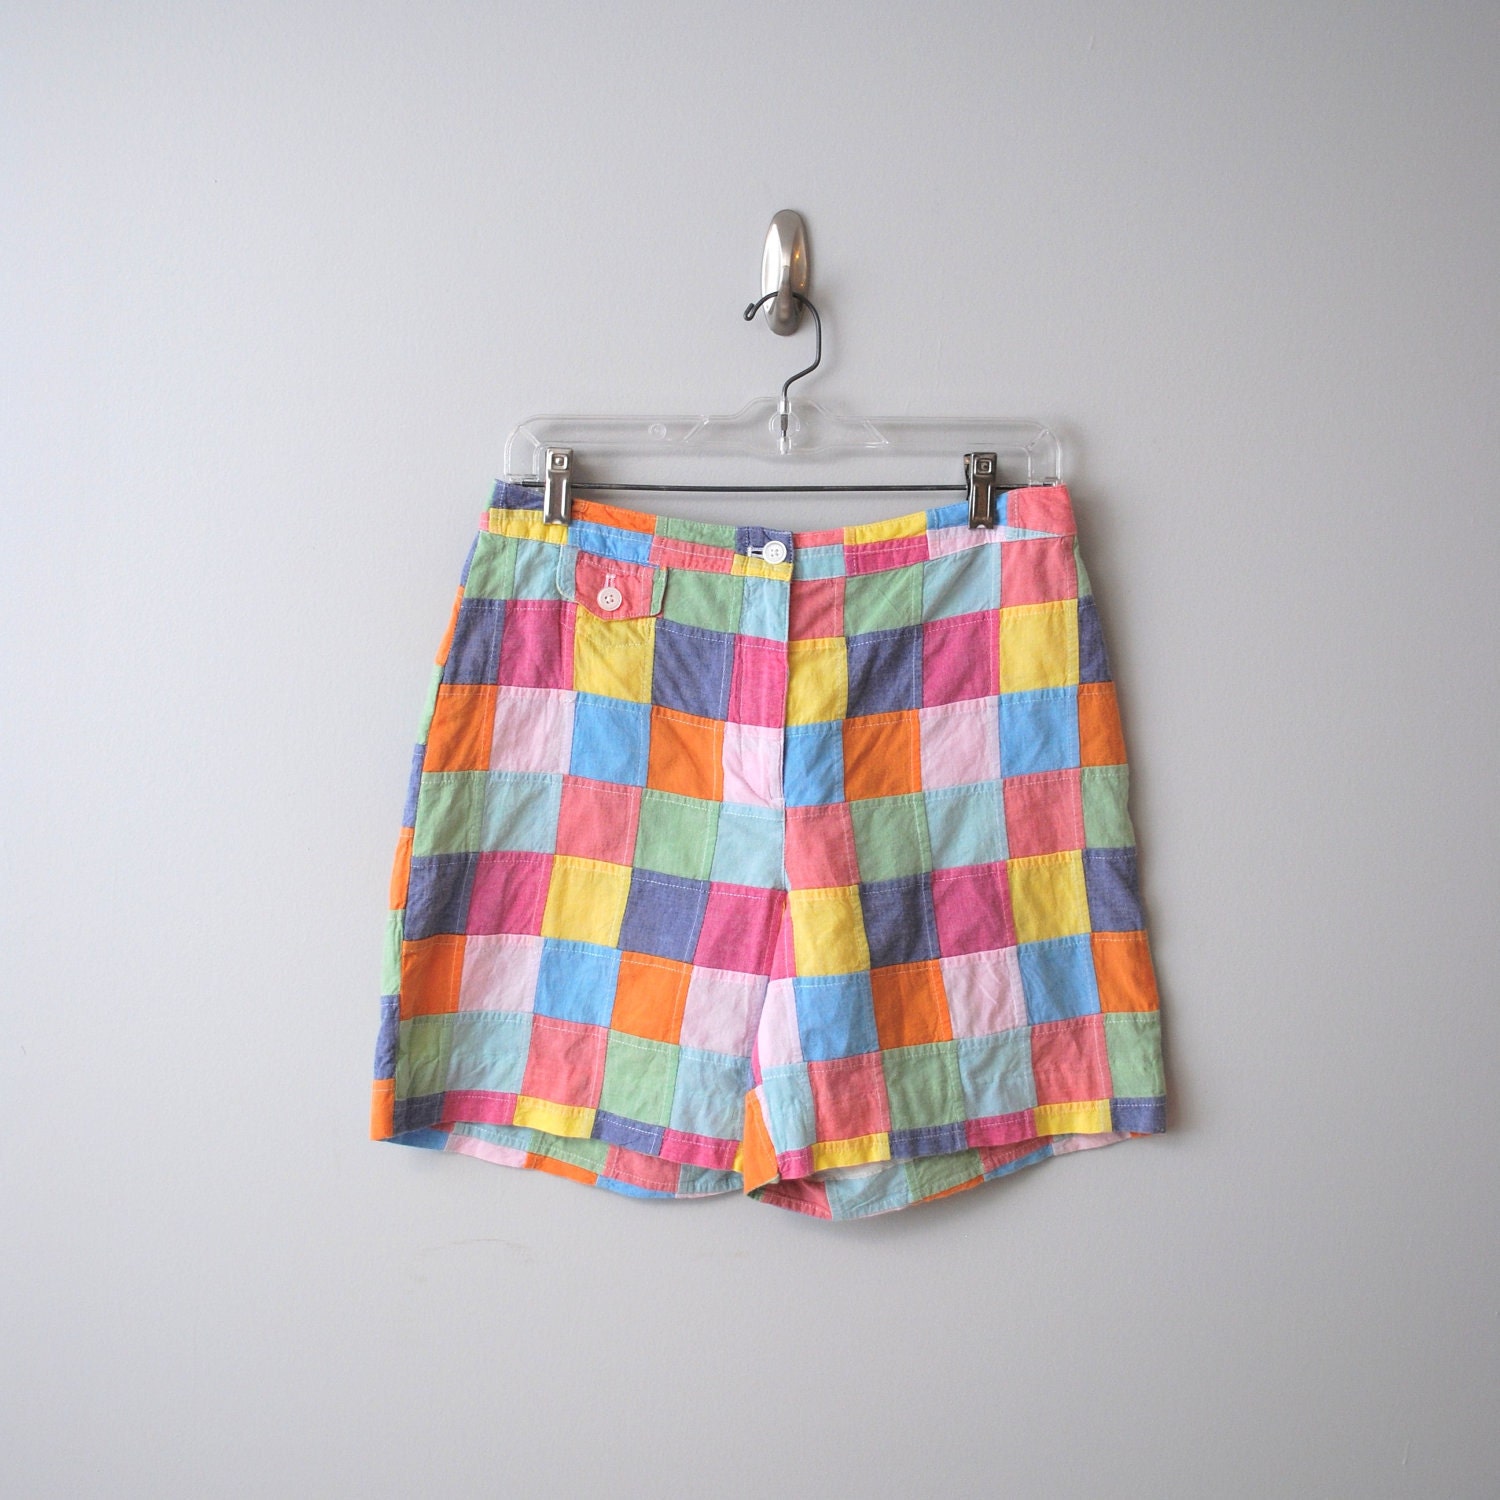 V I N T A G E 100% Cotton shorts, multi color pattern size 4